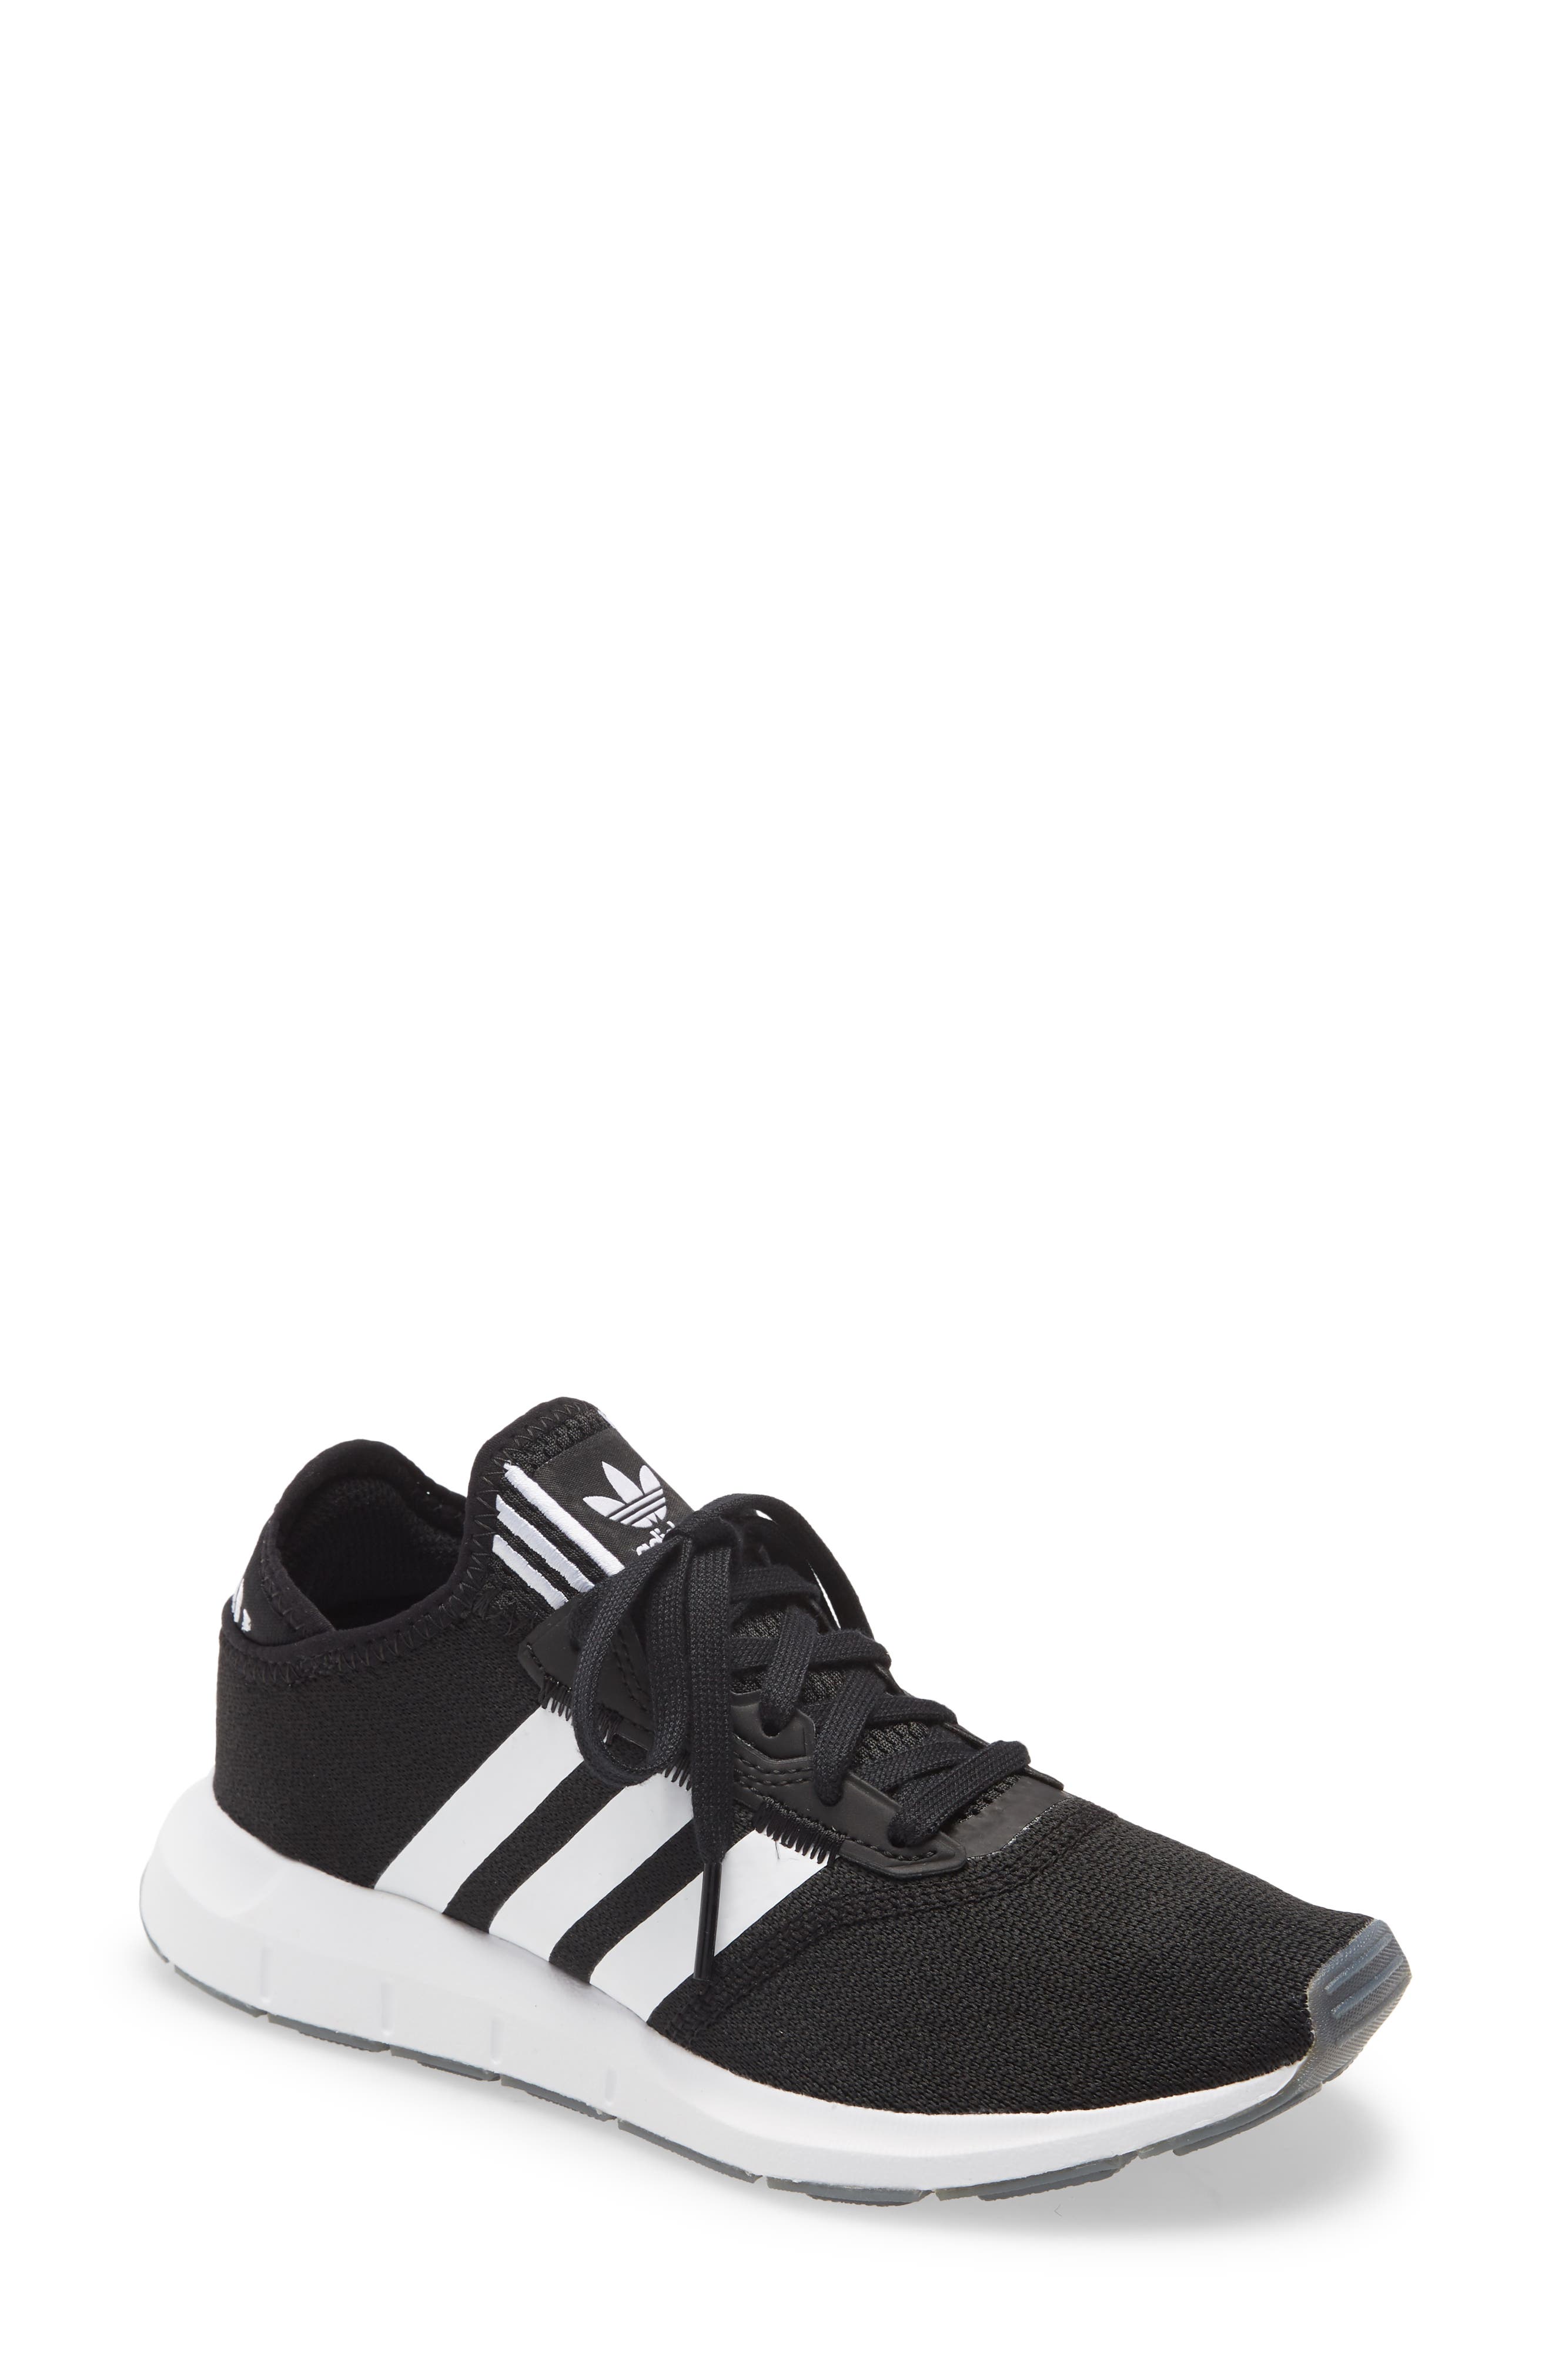 adidas black sneakers with white stripes